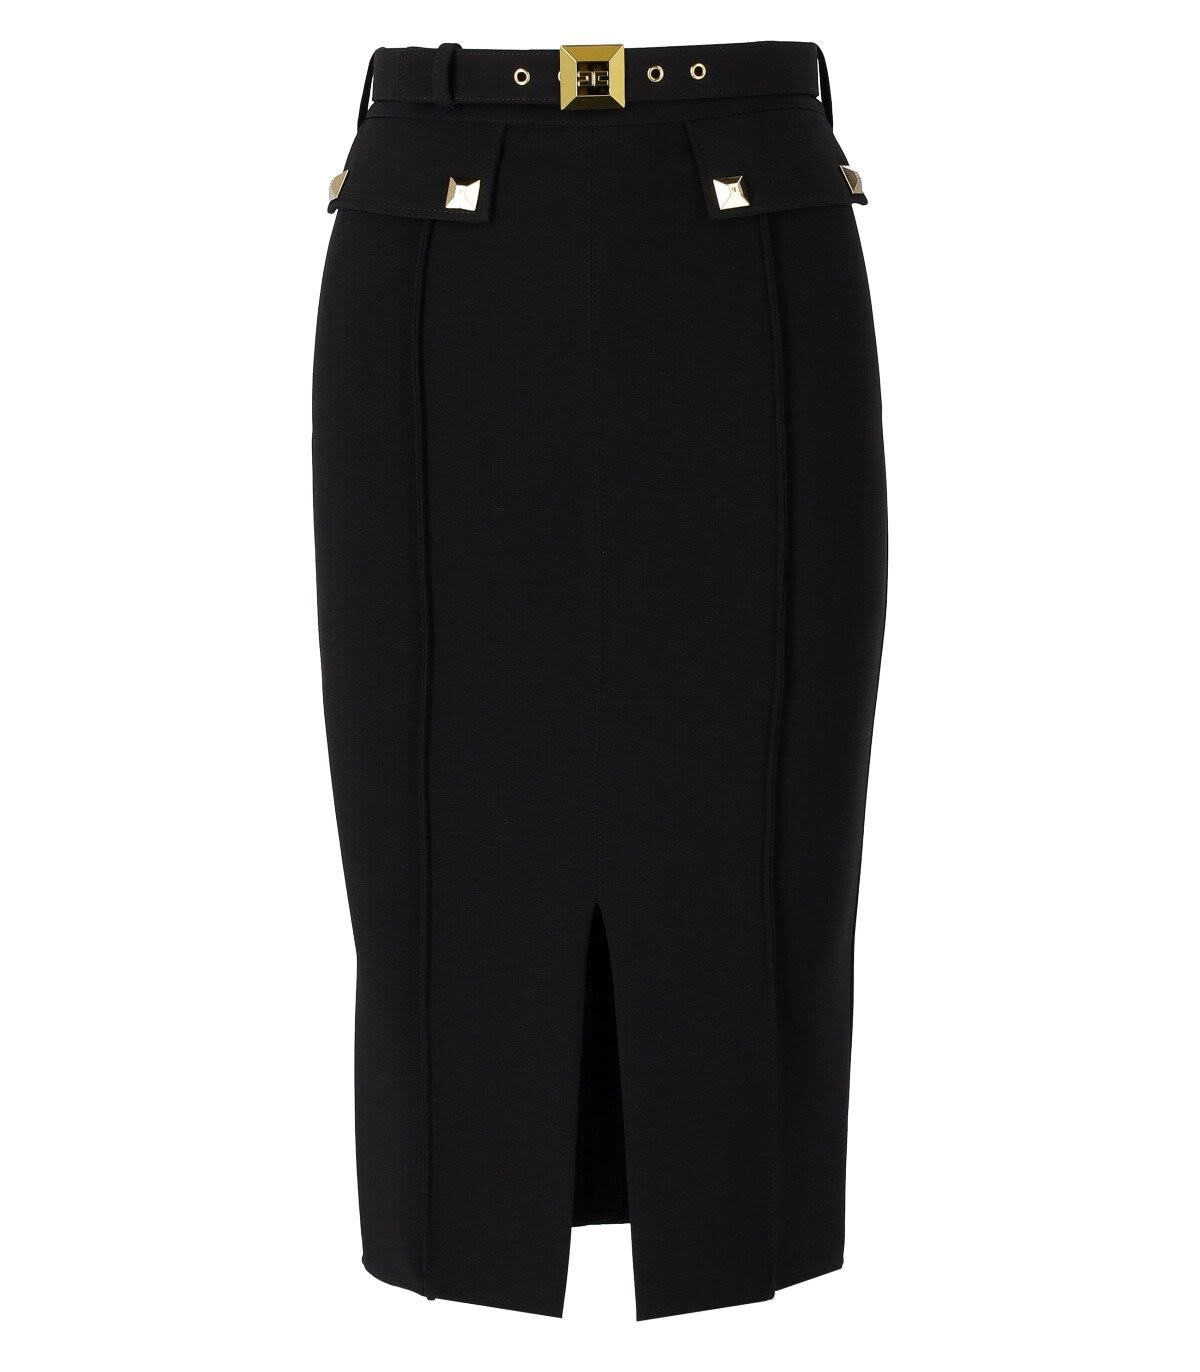 Elisabetta Franchi Black Pencil Skirt With Studs